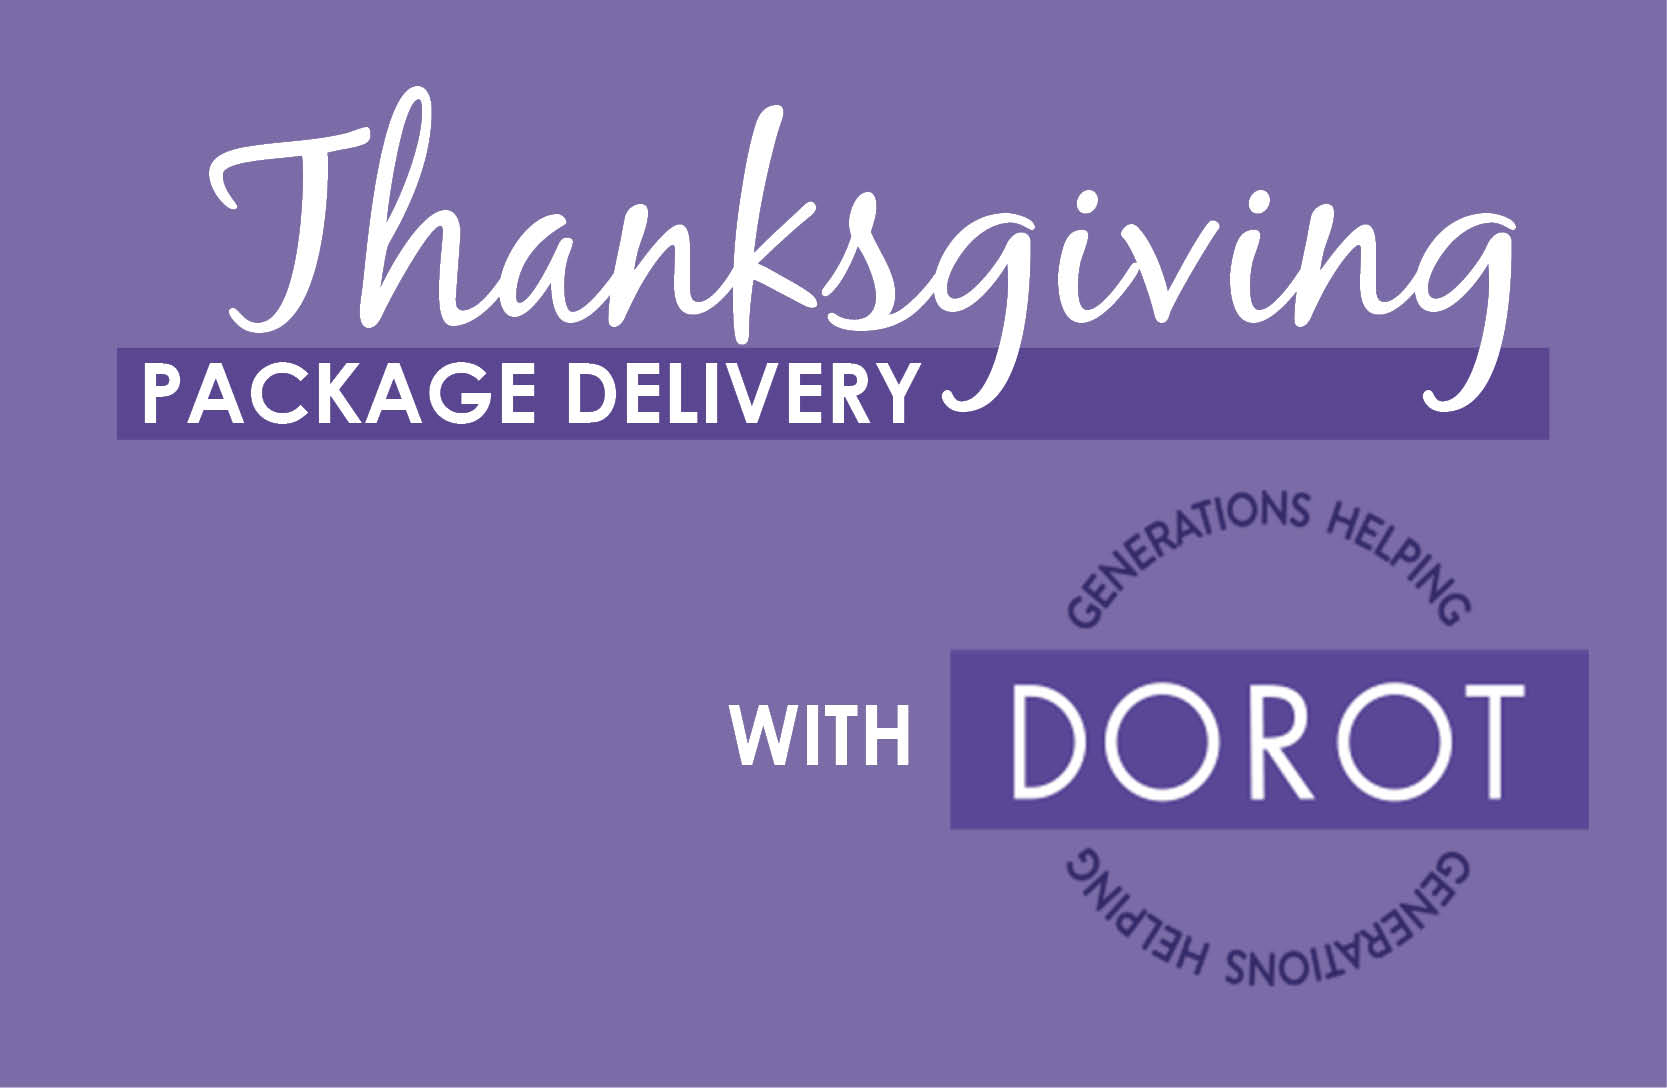 DOROT Package Delivery - Volunteers Needed